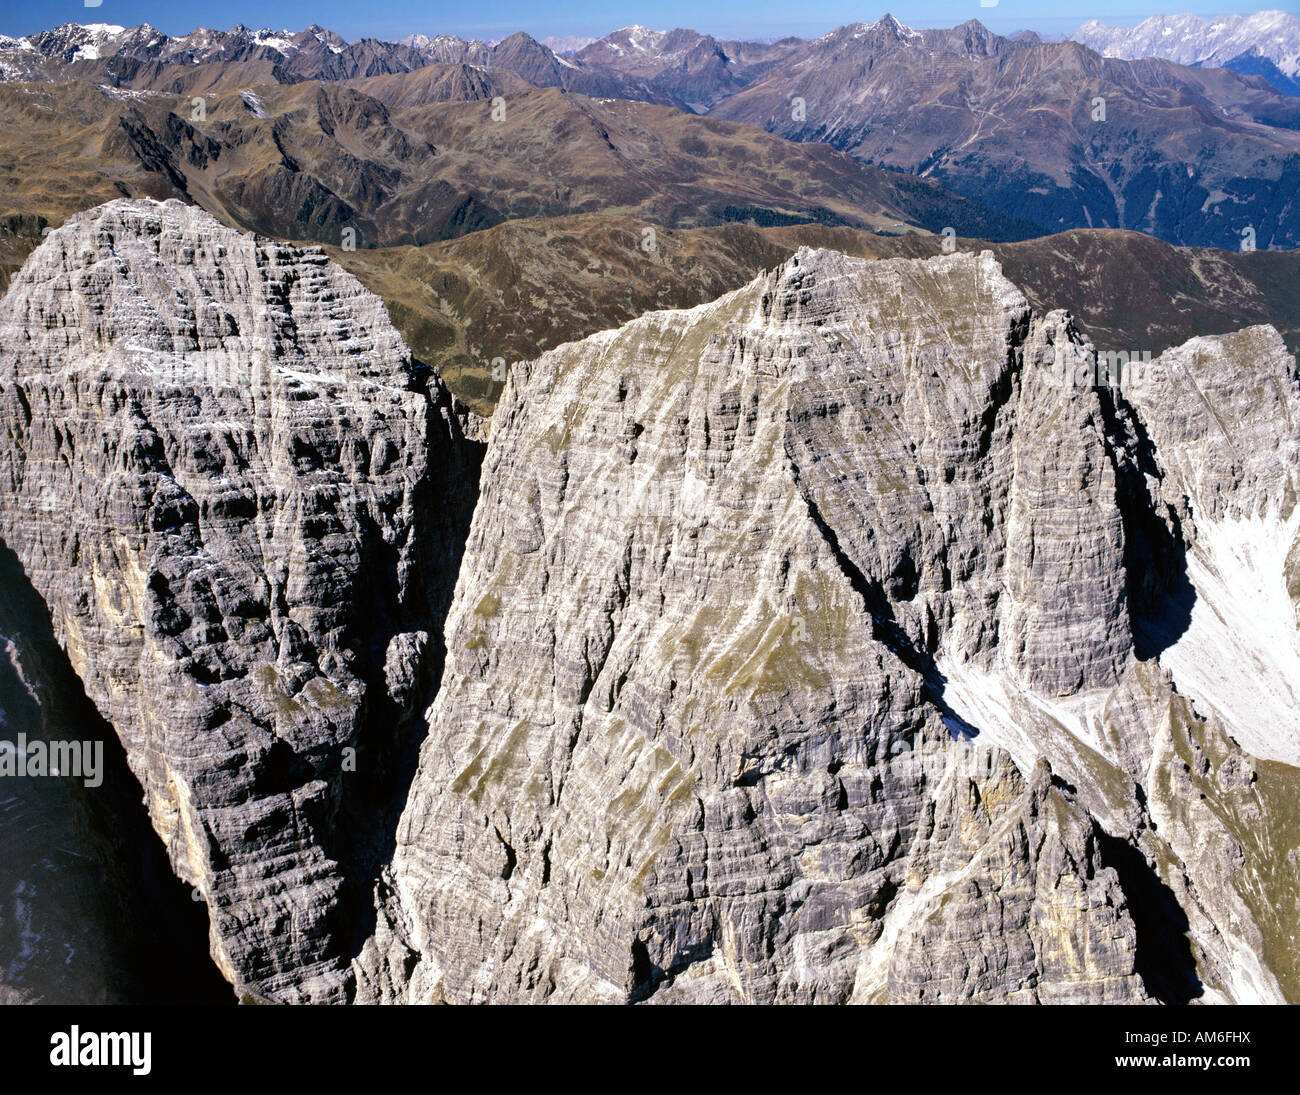 Kalkkoegel, Stubai Alps, Grosse and Kleine Ochsenwand, behind Wettersteingebirge and Mieminger Kette, Tyrol, Austria Stock Photo